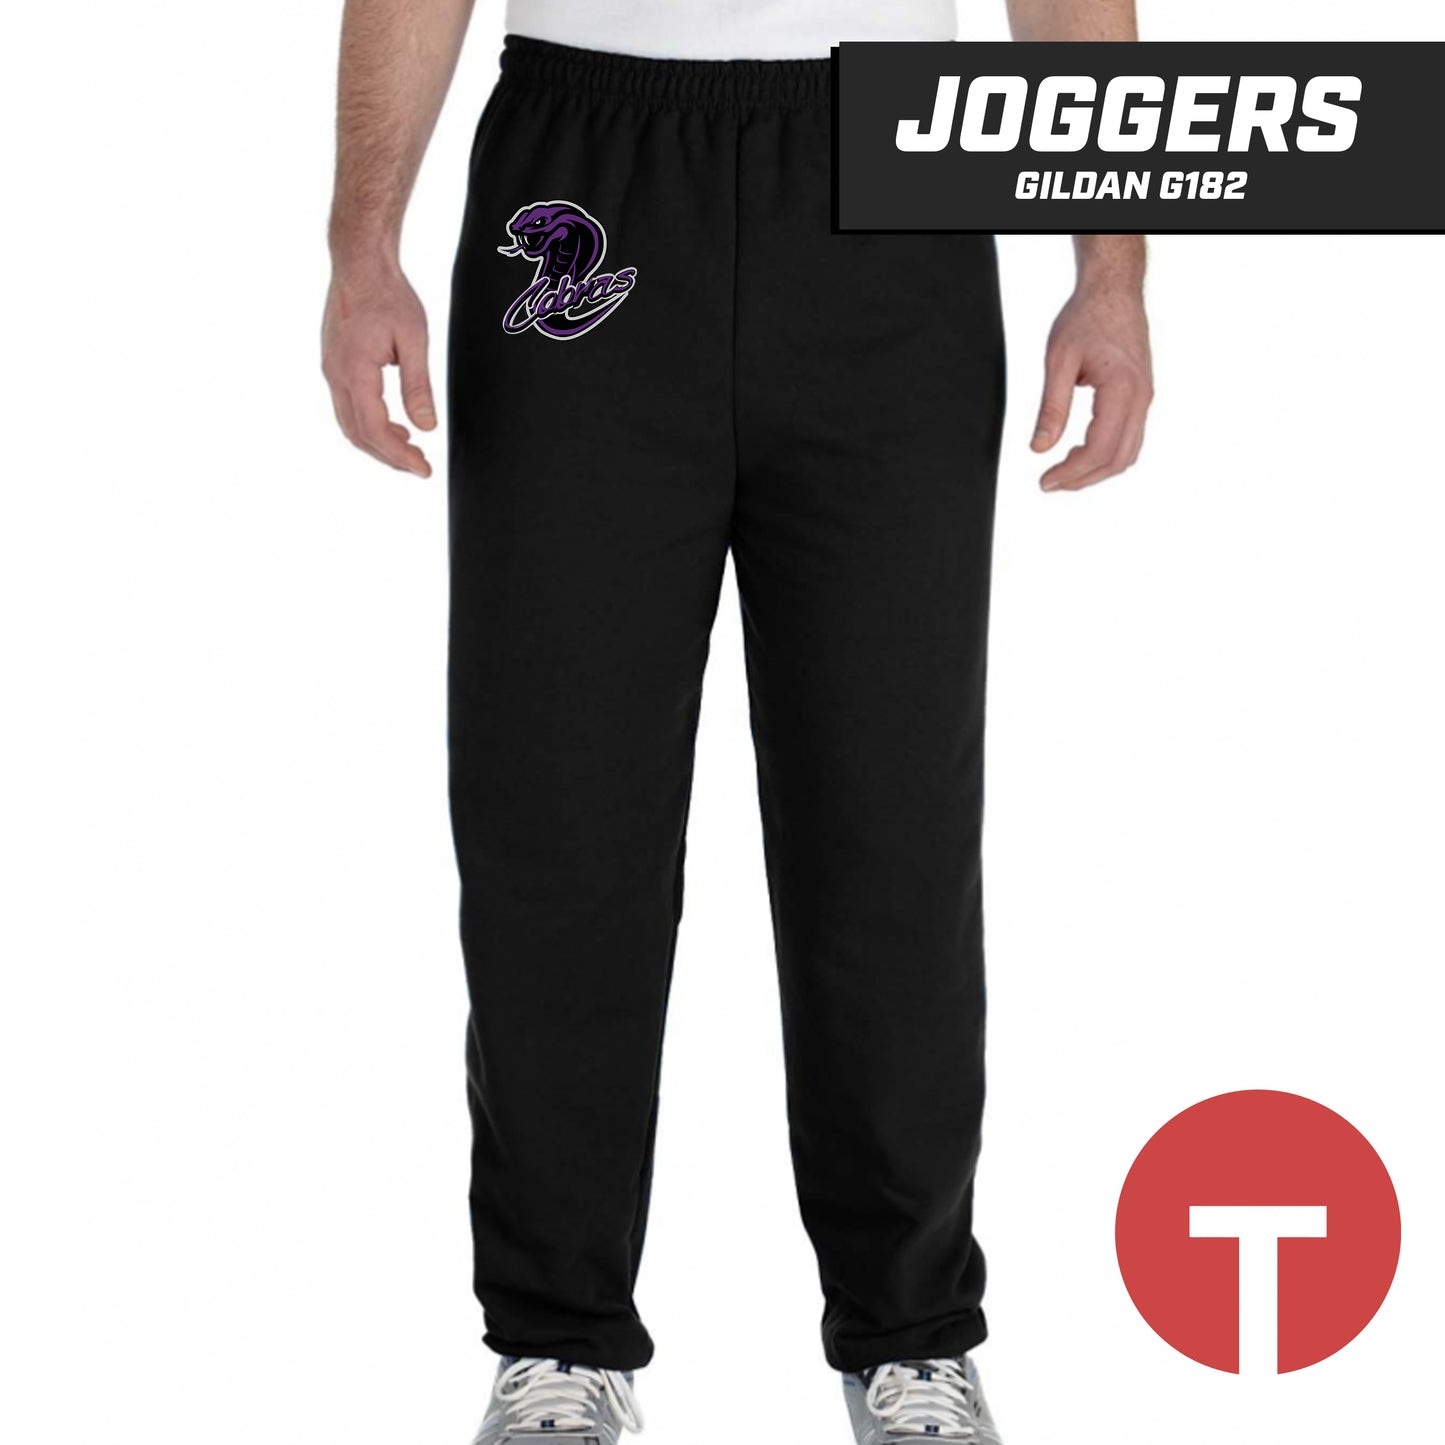 Cobras Softball - Jogger pants Gildan G182